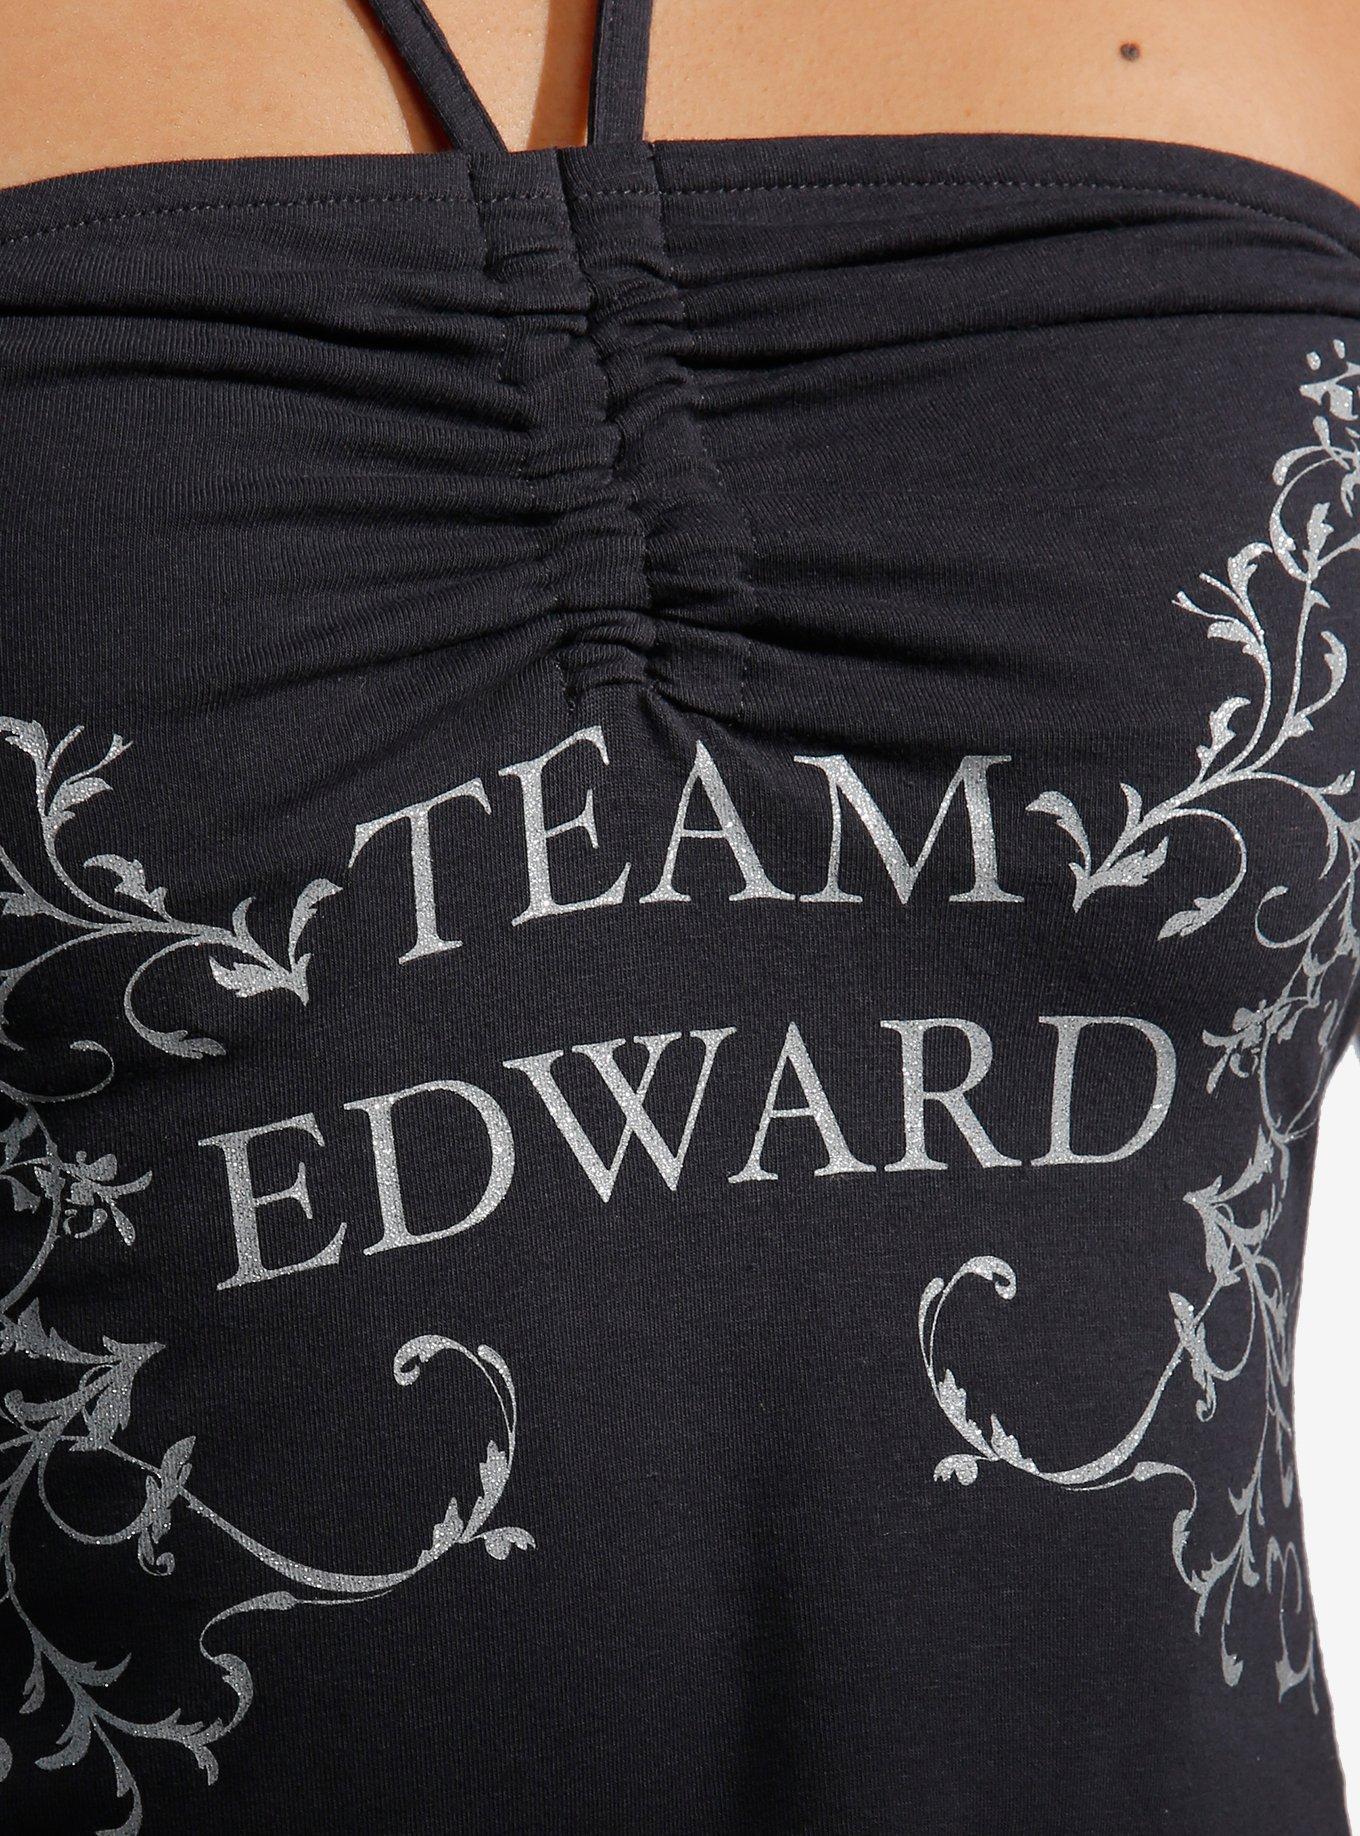 The Twilight Saga Team Edward Girls Halter Top